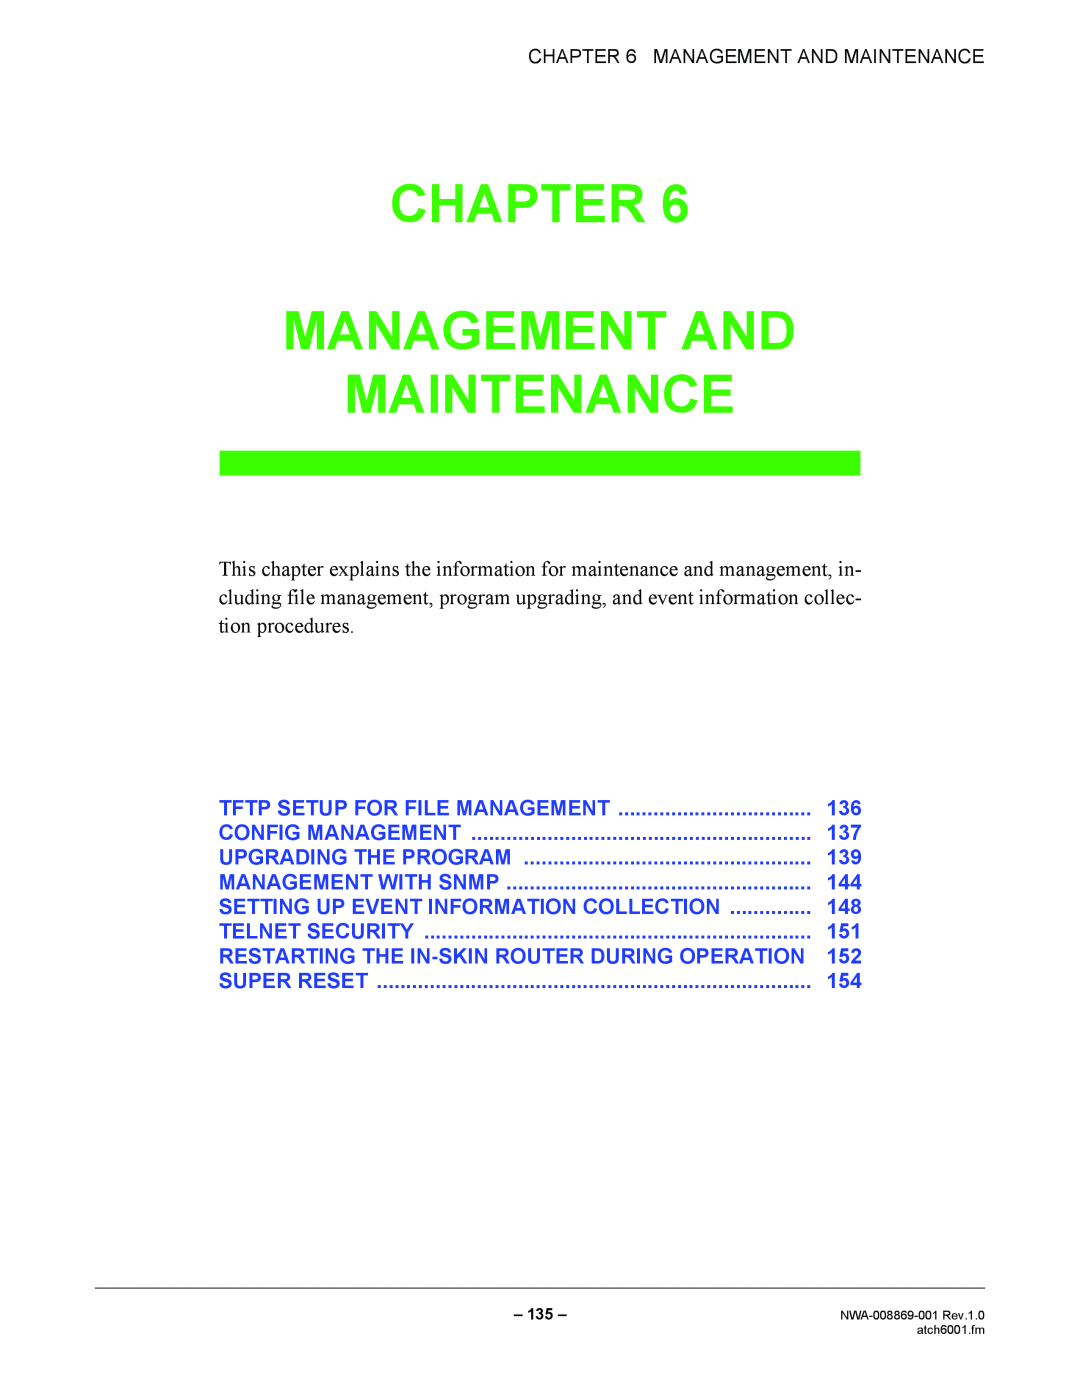 NEC NWA-008869-001 manual Chapter Management And Maintenance 